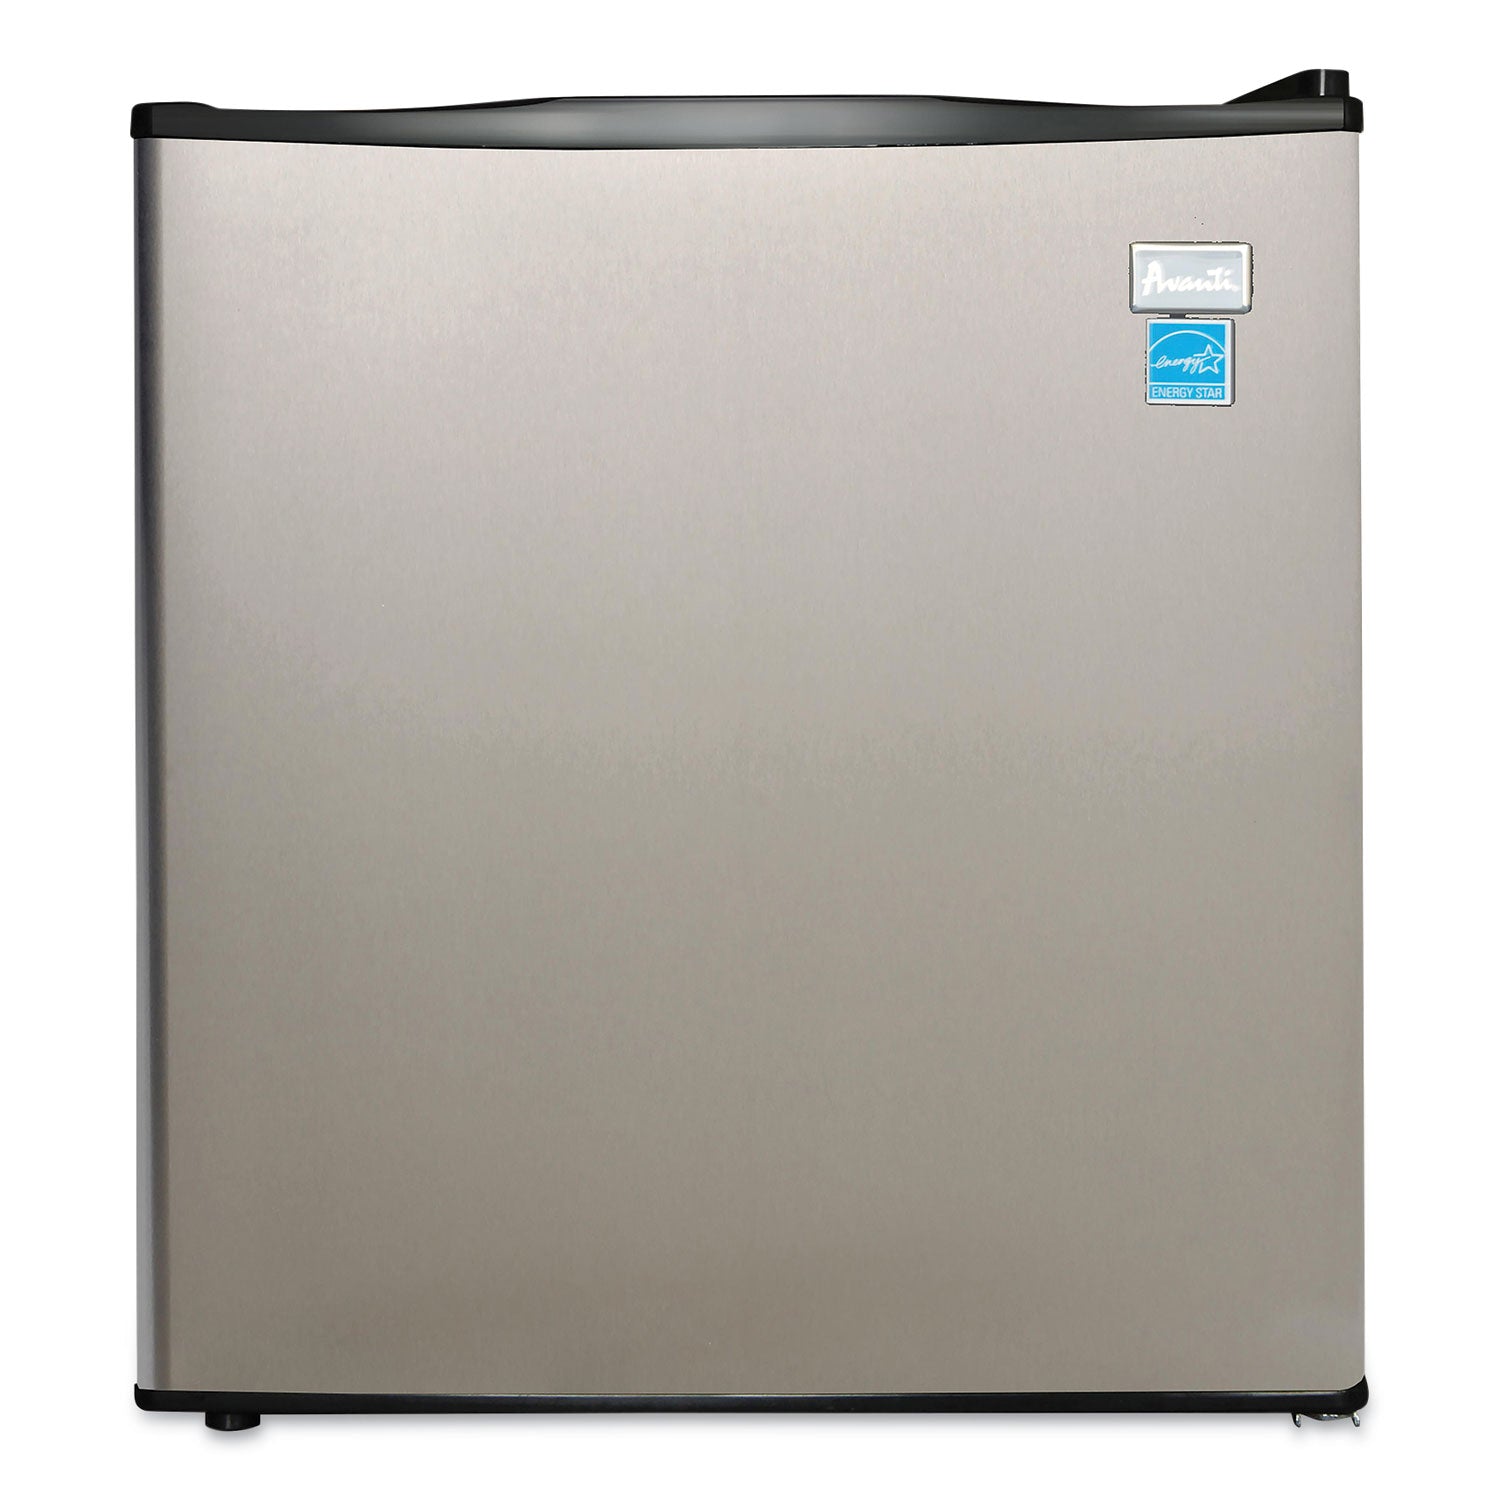 17-cu-ft-all-refrigerator-stainless-steel-black_avaar17t3s - 1